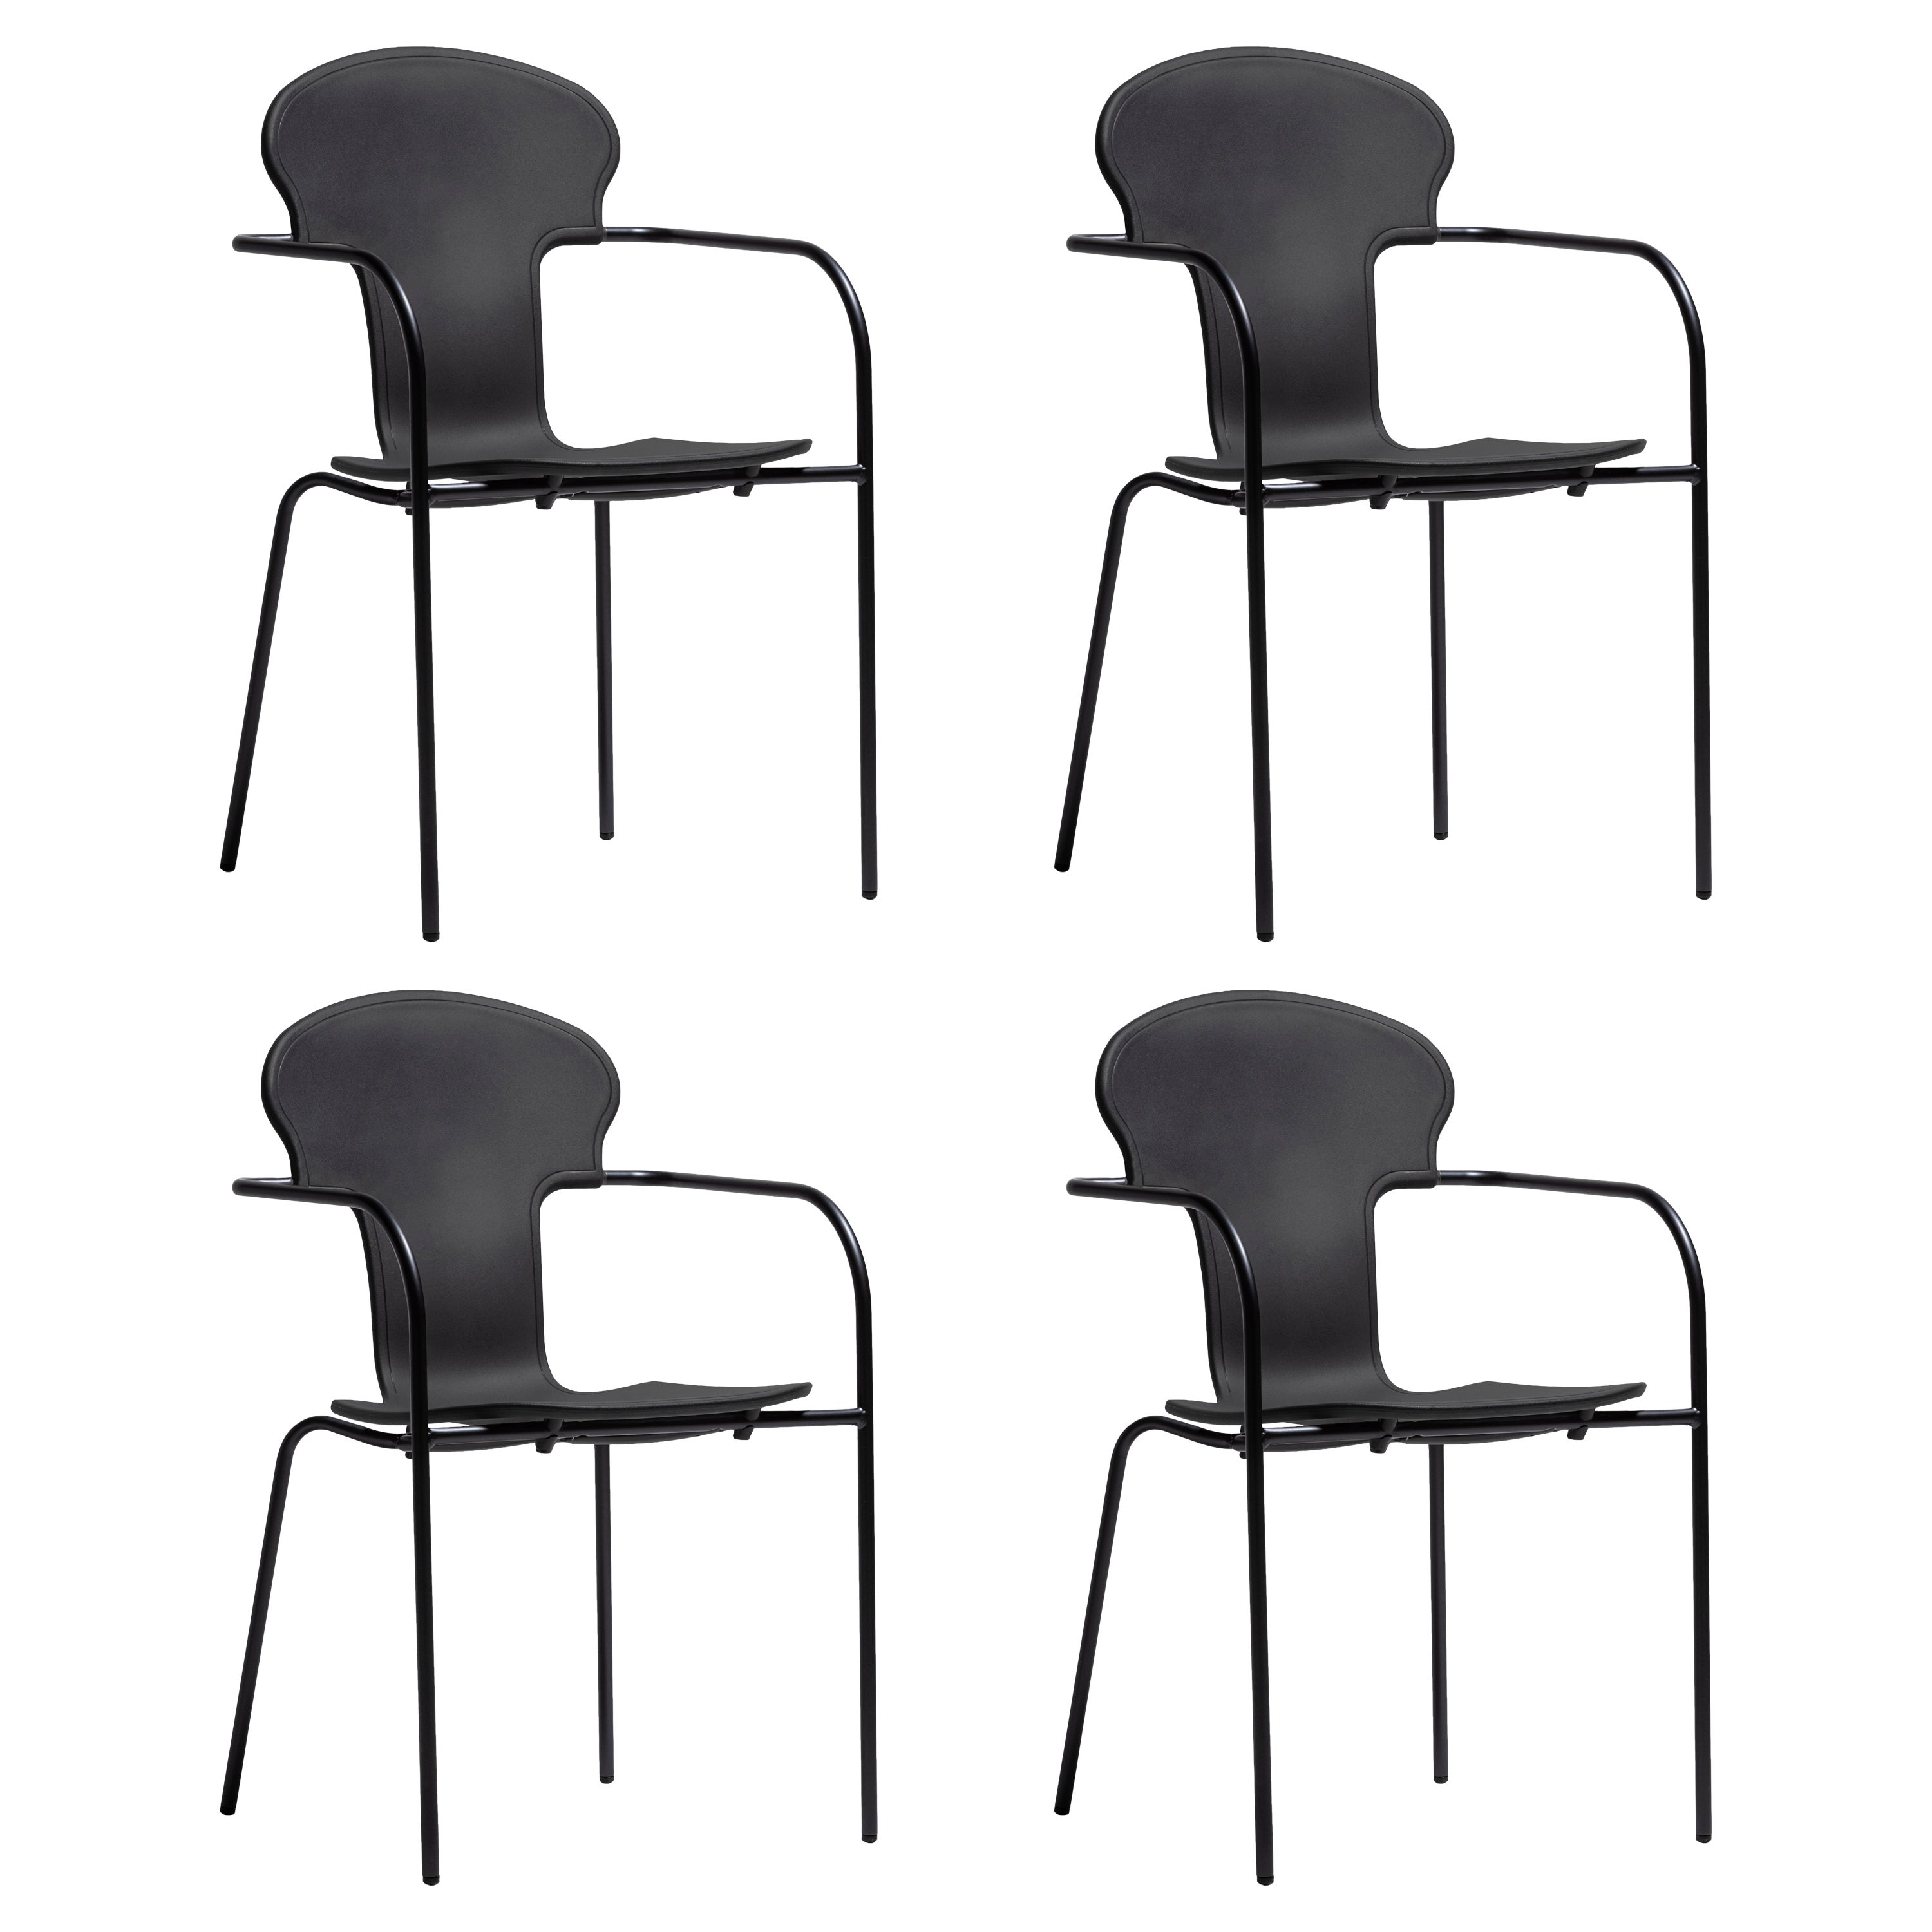 Oscar Tusquets Blanca Chairs